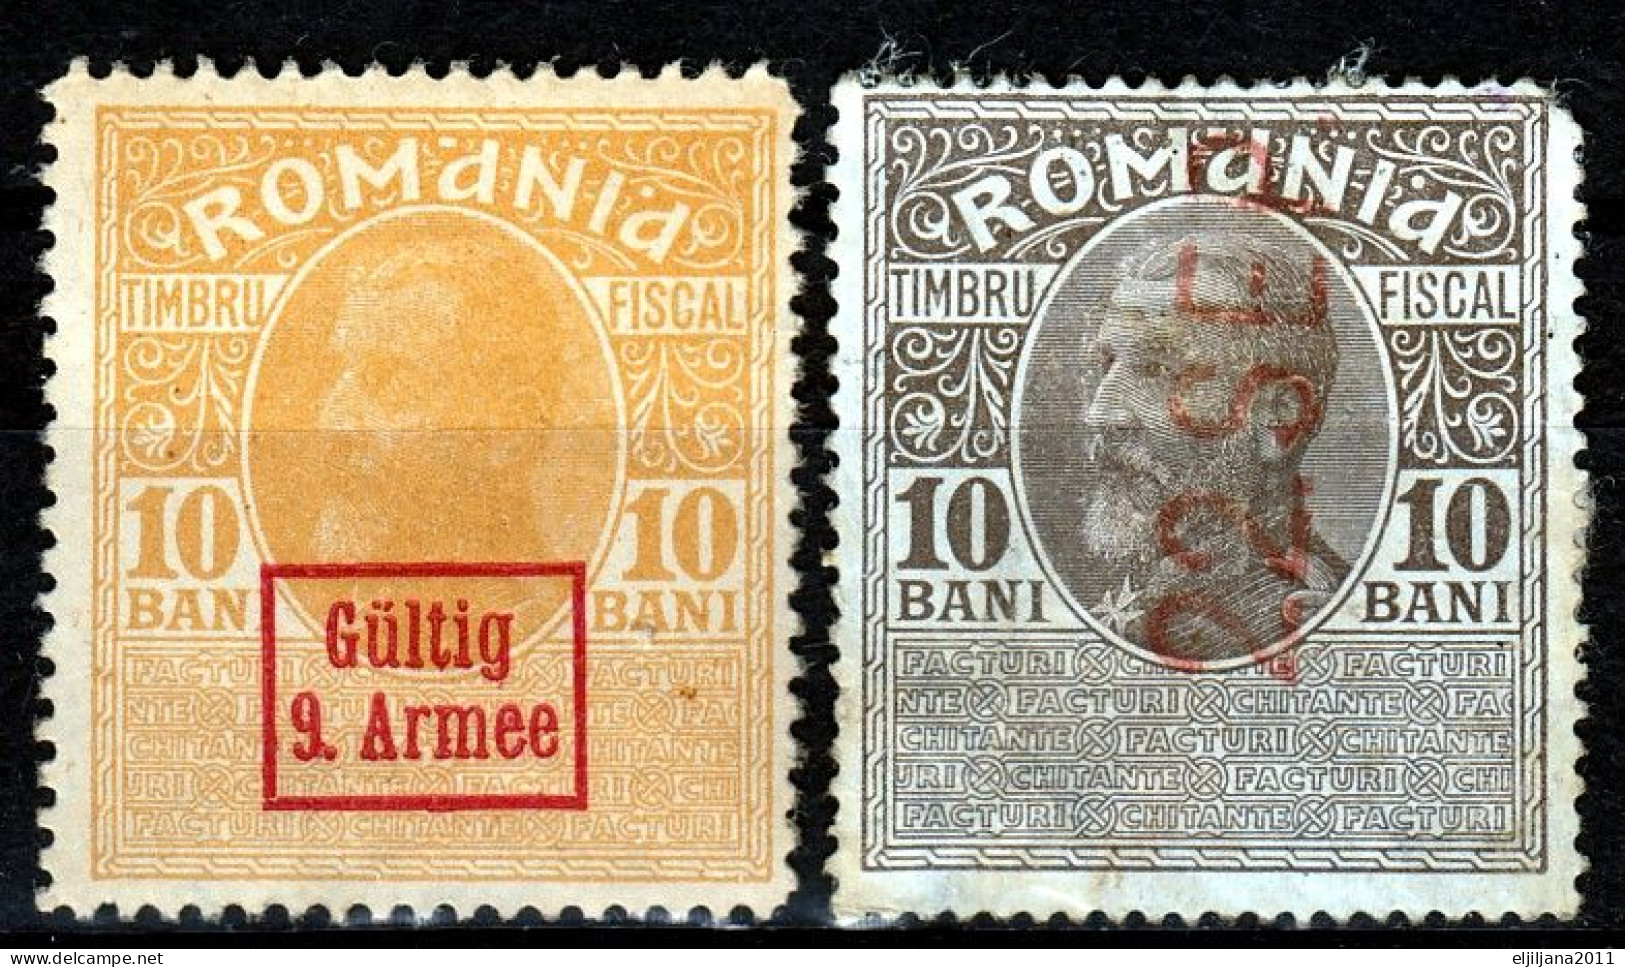 ⁕ Romania 1917 - 1918 Rumänien WWI ⁕ German Occupation "Gültig 9. Armee" Revenue Fiscal Tax Timbru 10 Bani ⁕ 2v MNH & MH - Occupations